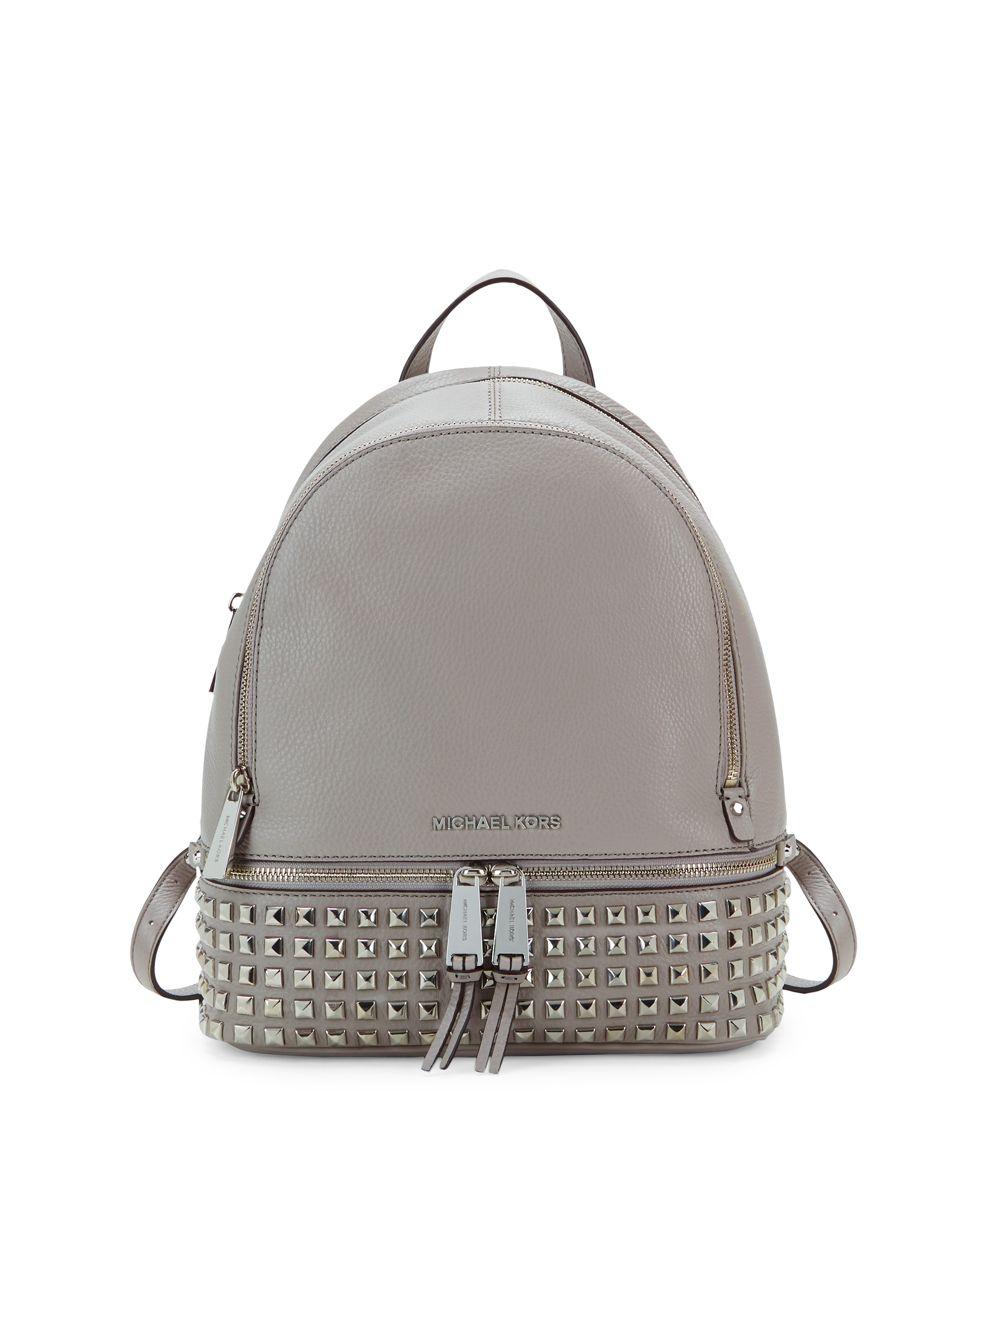 Michael Kors Rhea Medium Studded Pebbled Leather Backpack in Gray | Lyst